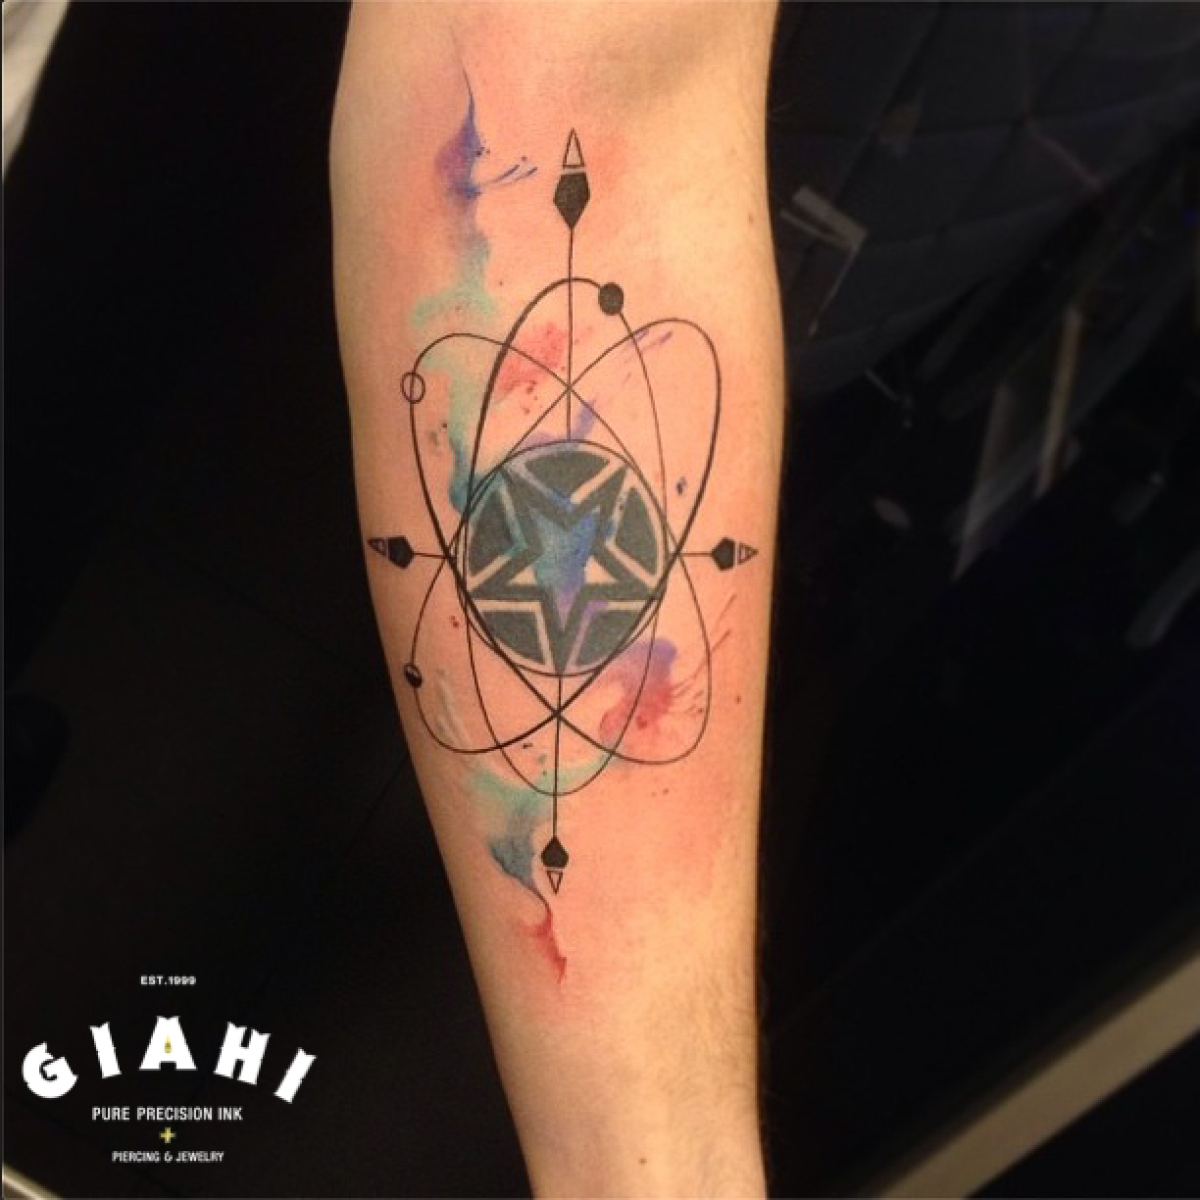 Atom Star tattoo by Roony